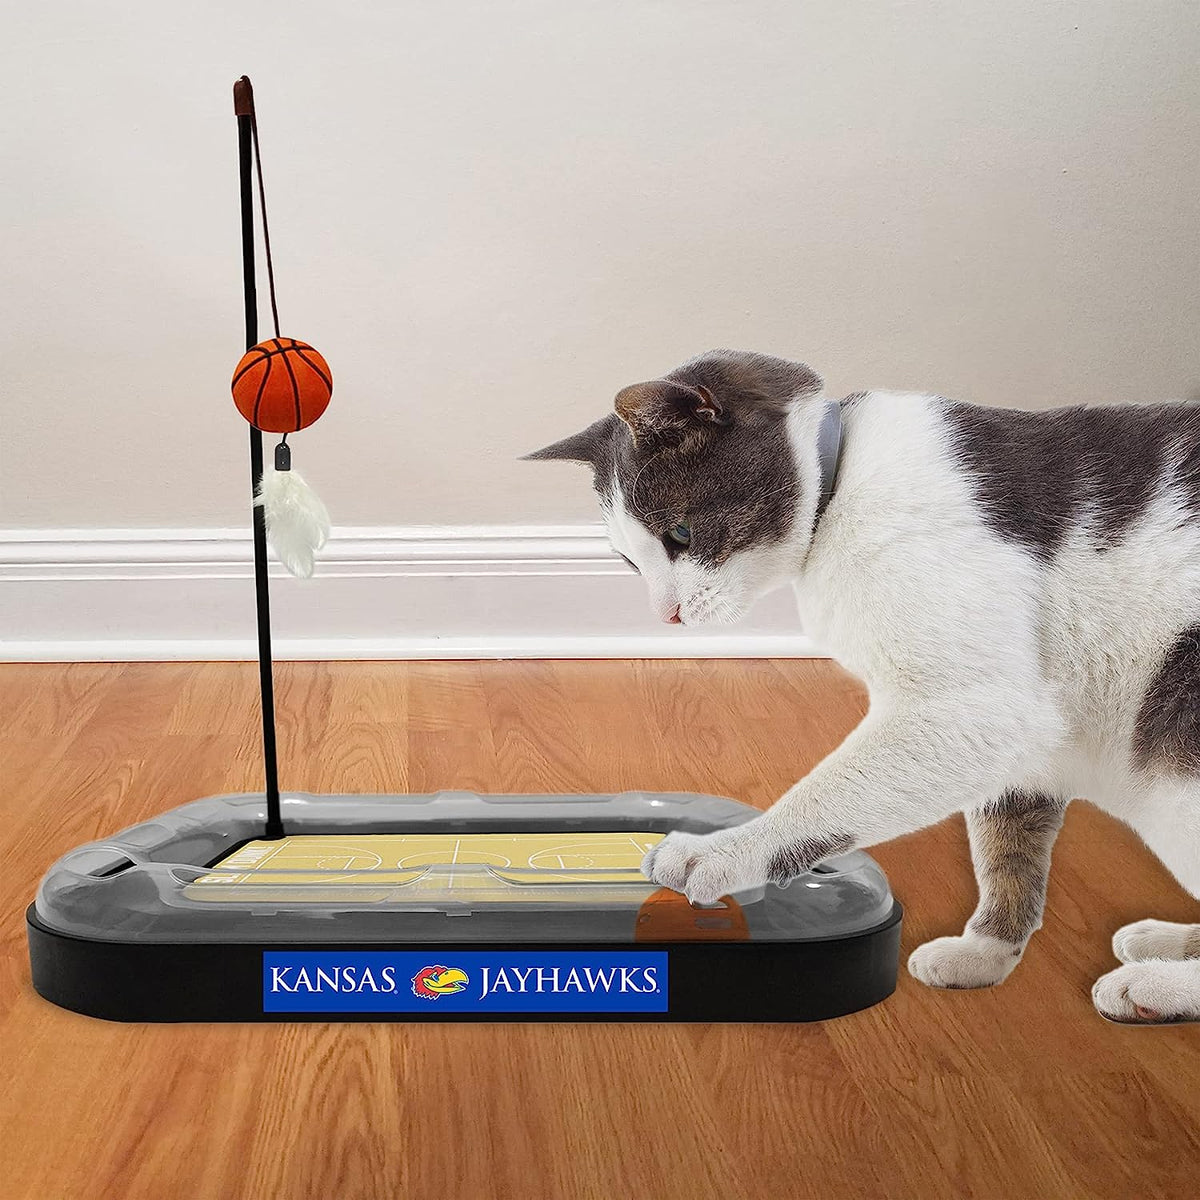 KS Jayhawks Basketball Cat Scratcher Toy